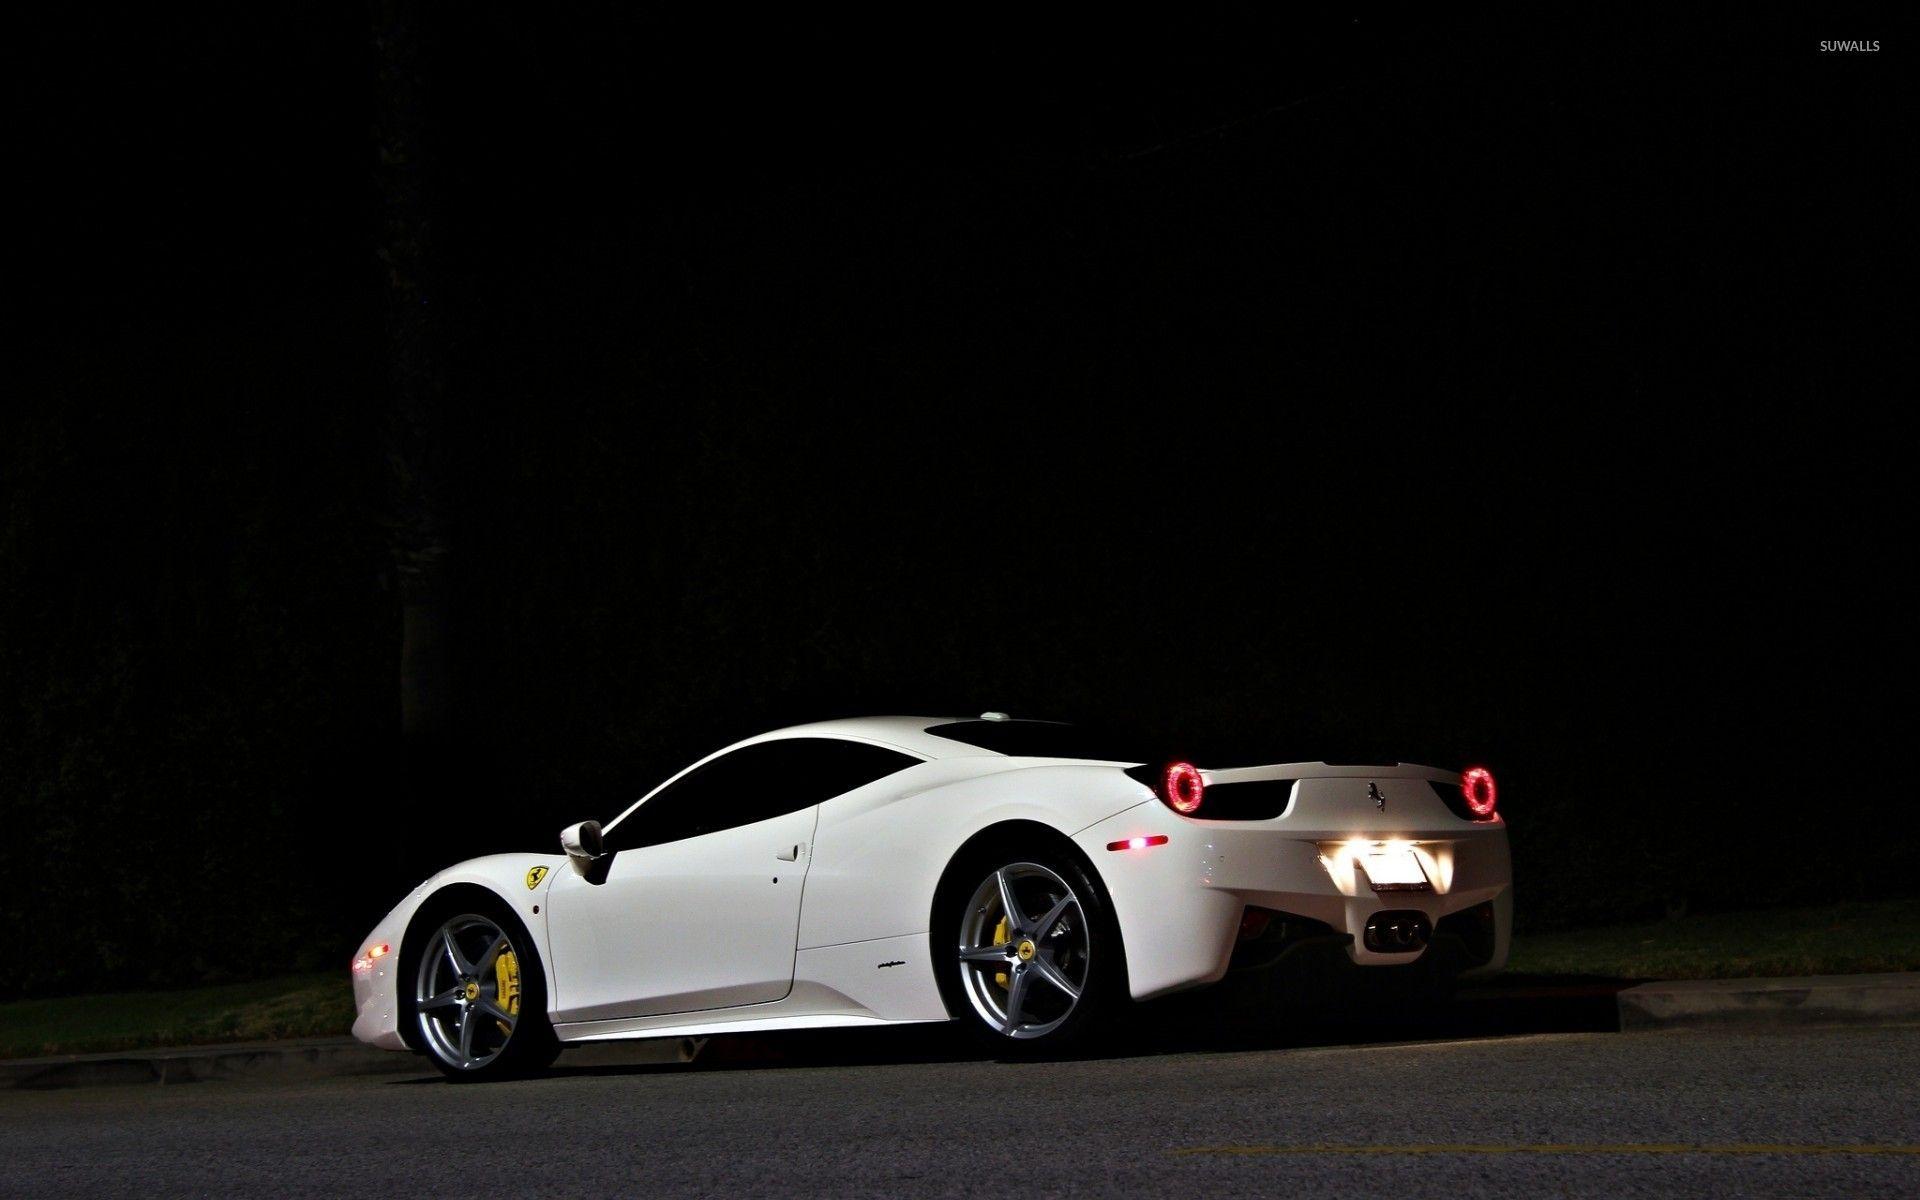 White Ferrari 4k Ultra Hd Wallpapers Top Free White Ferrari 4k Ultra Hd Backgrounds 6756